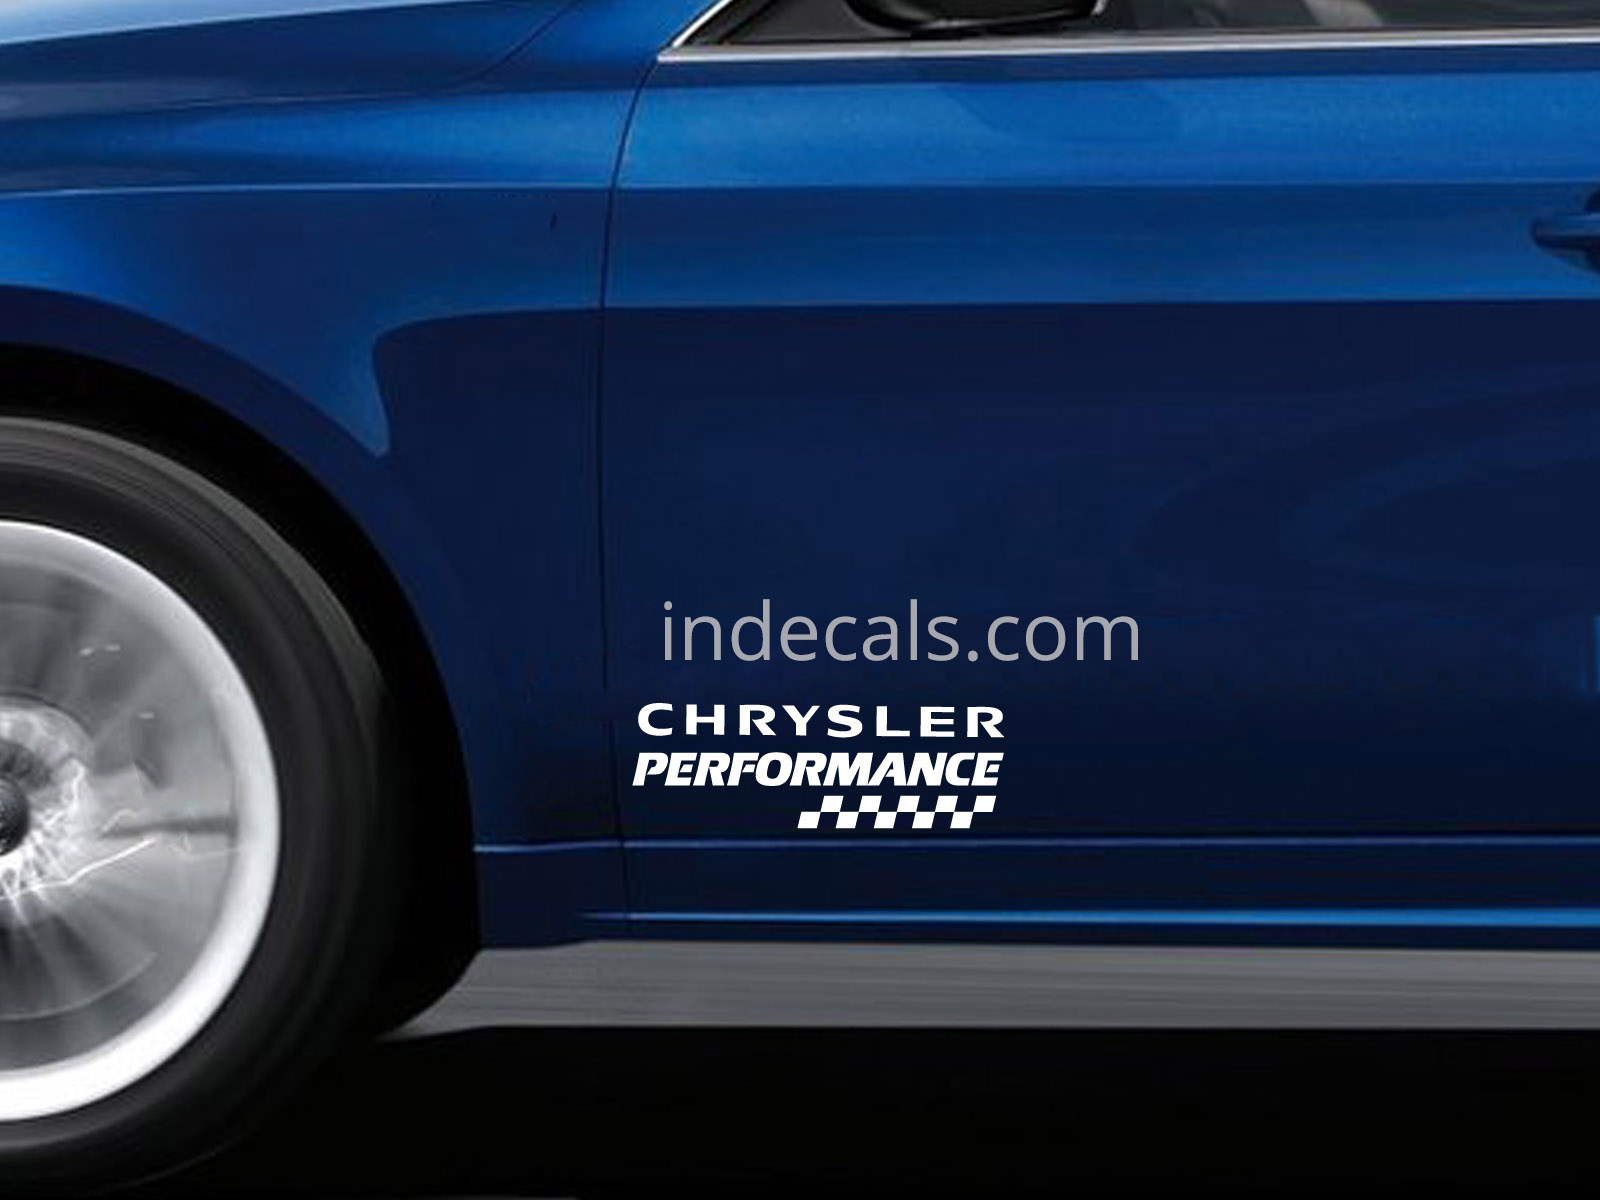 2 x Chrysler Performance Stickers for Doors - White